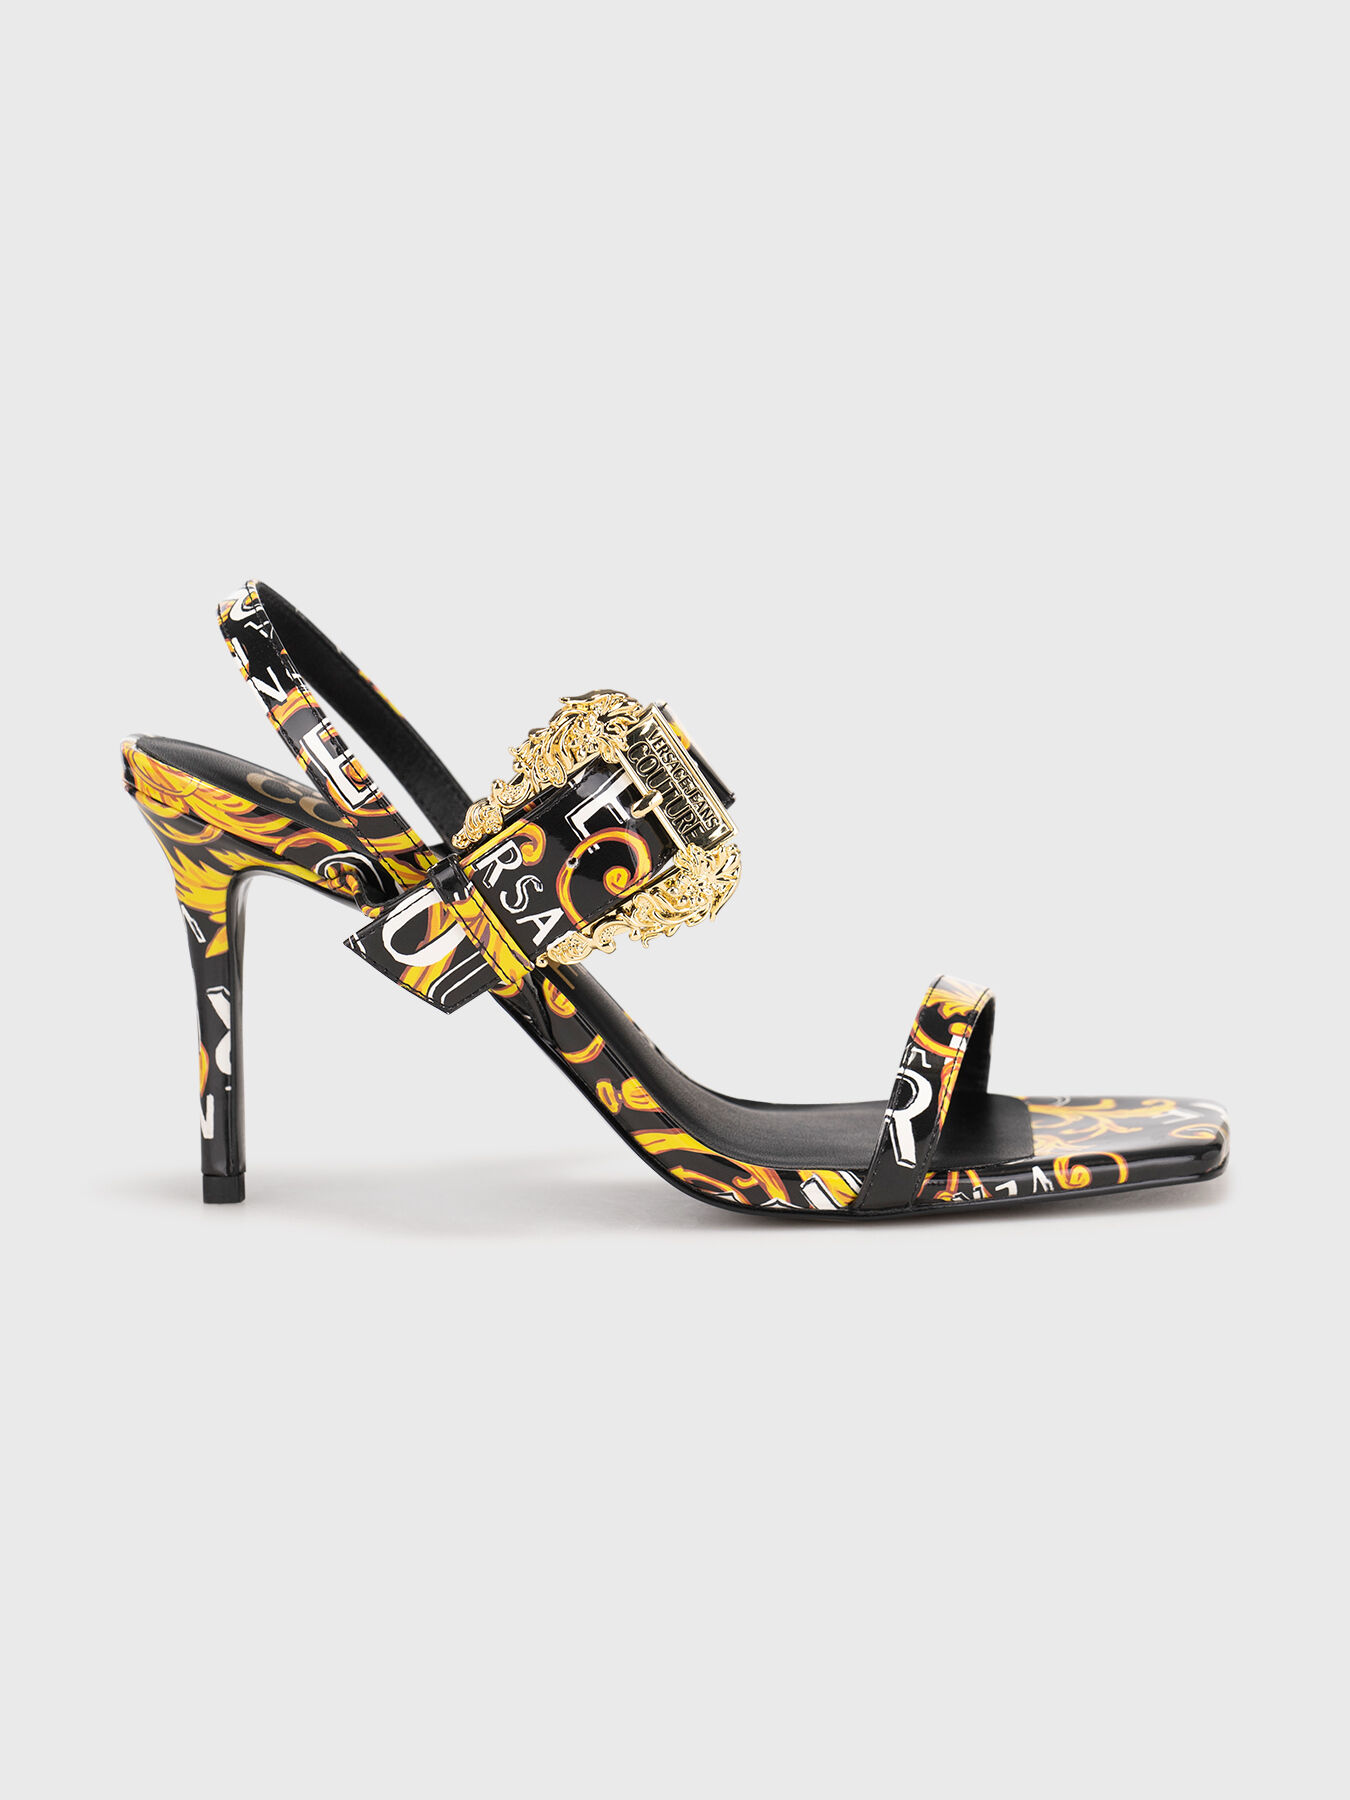 Versace Chain & Leather High-Heel Sandals size 39 | eBay